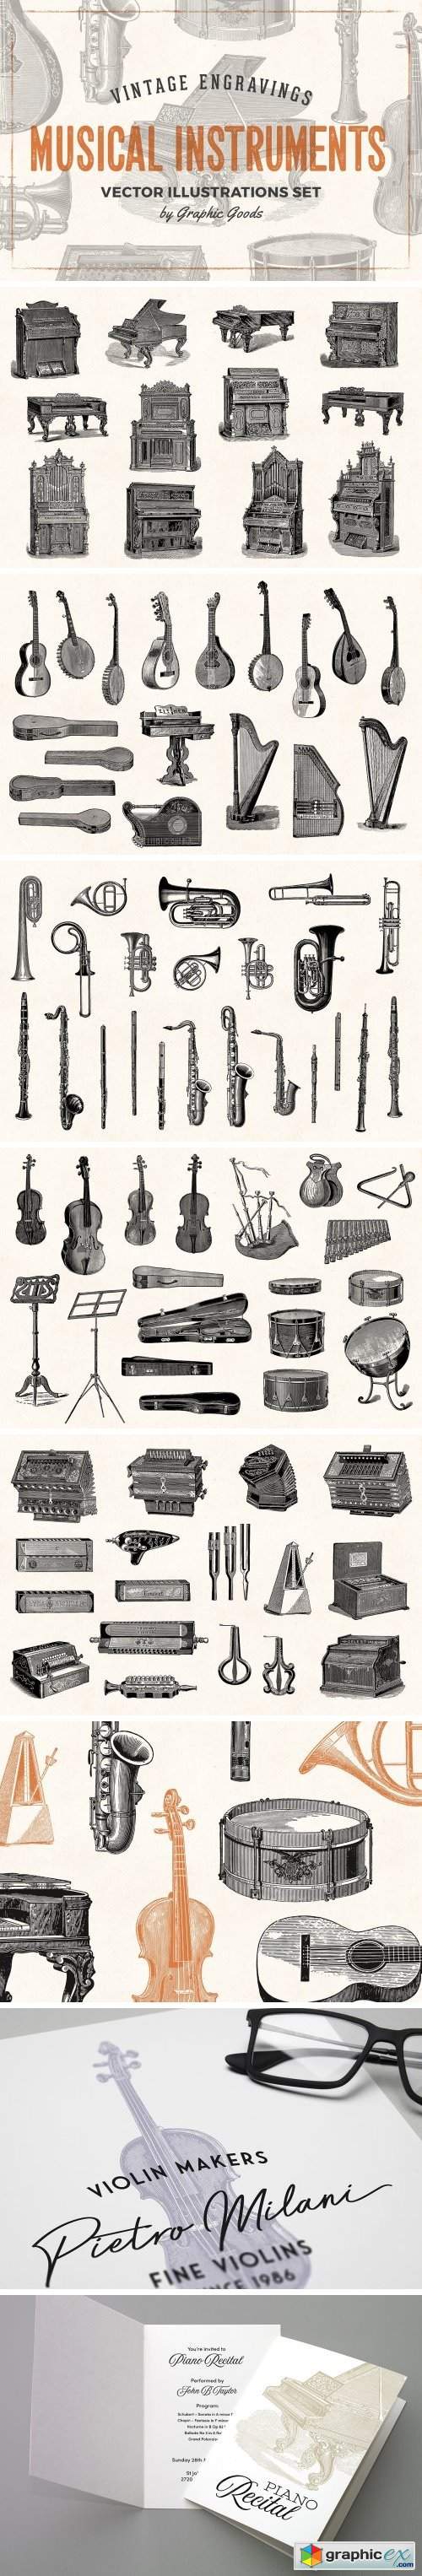 Musical Instruments Engravings Set